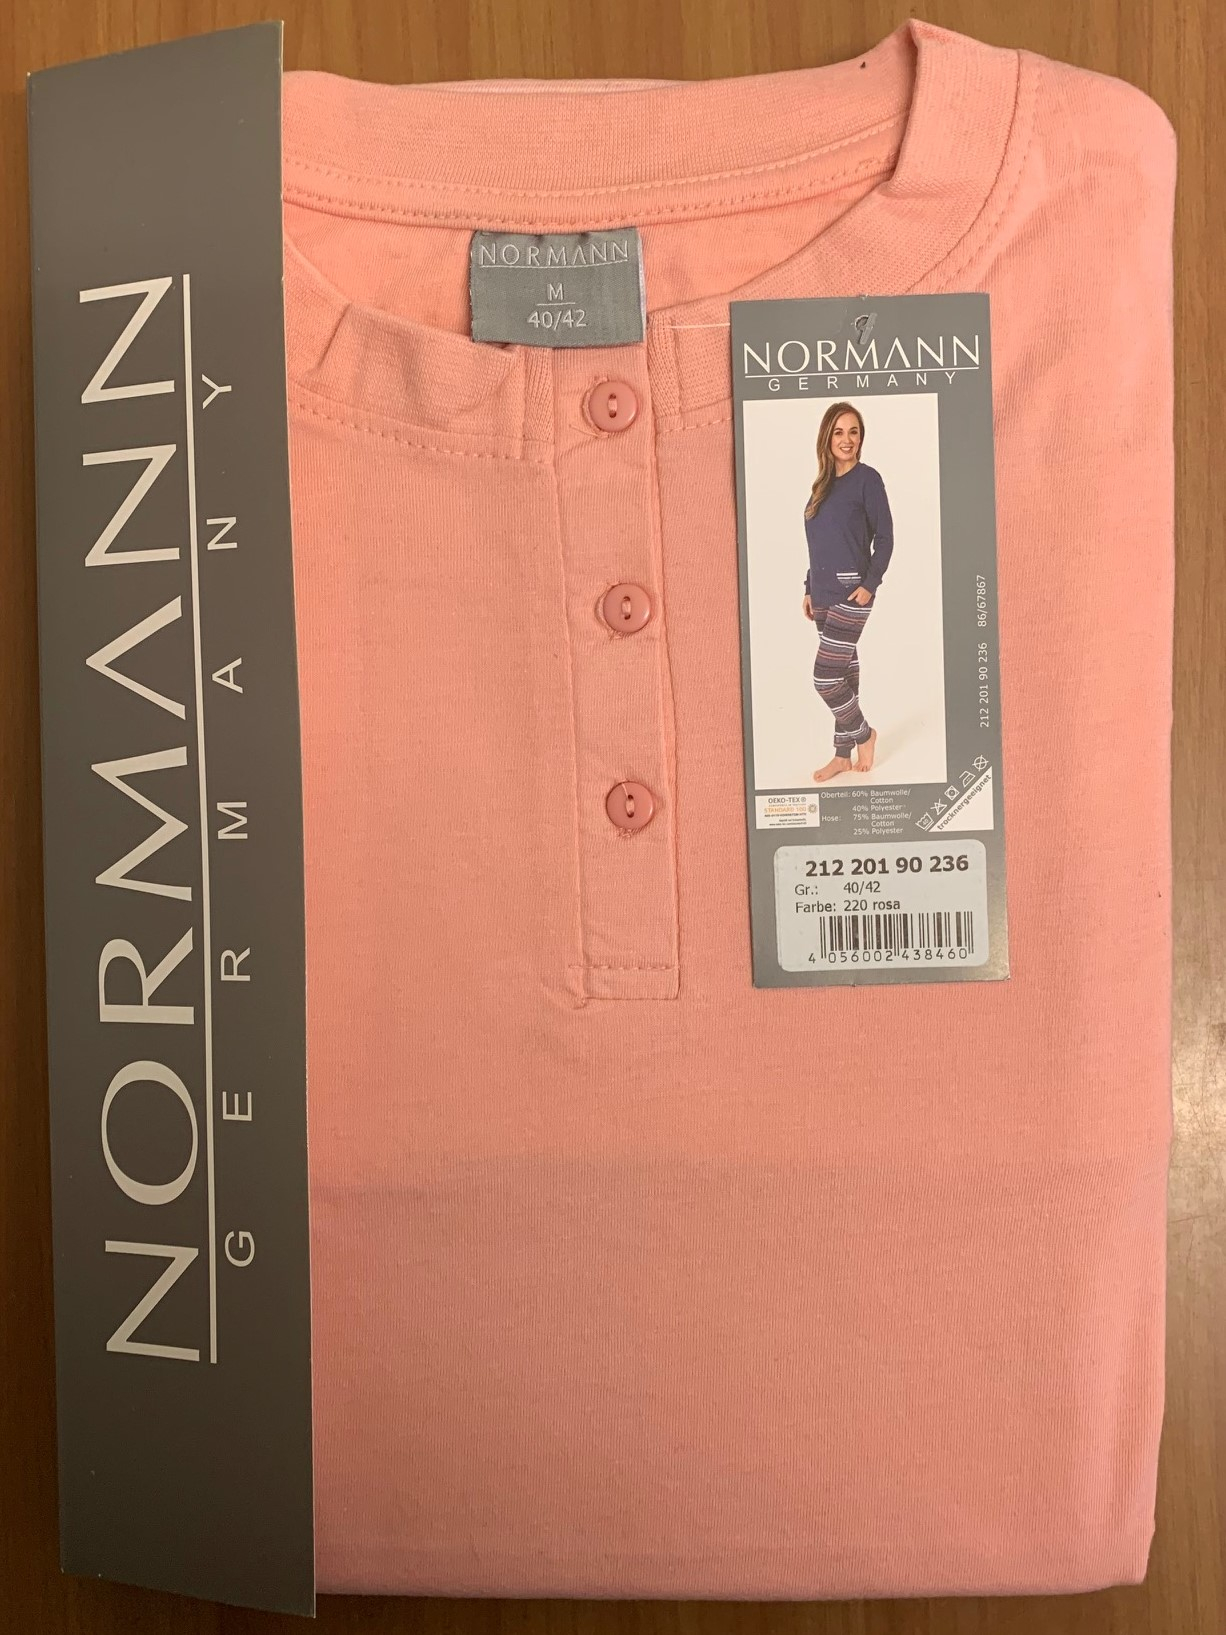 Normann dames pyjama 20190236 - Rose - XL 48/50